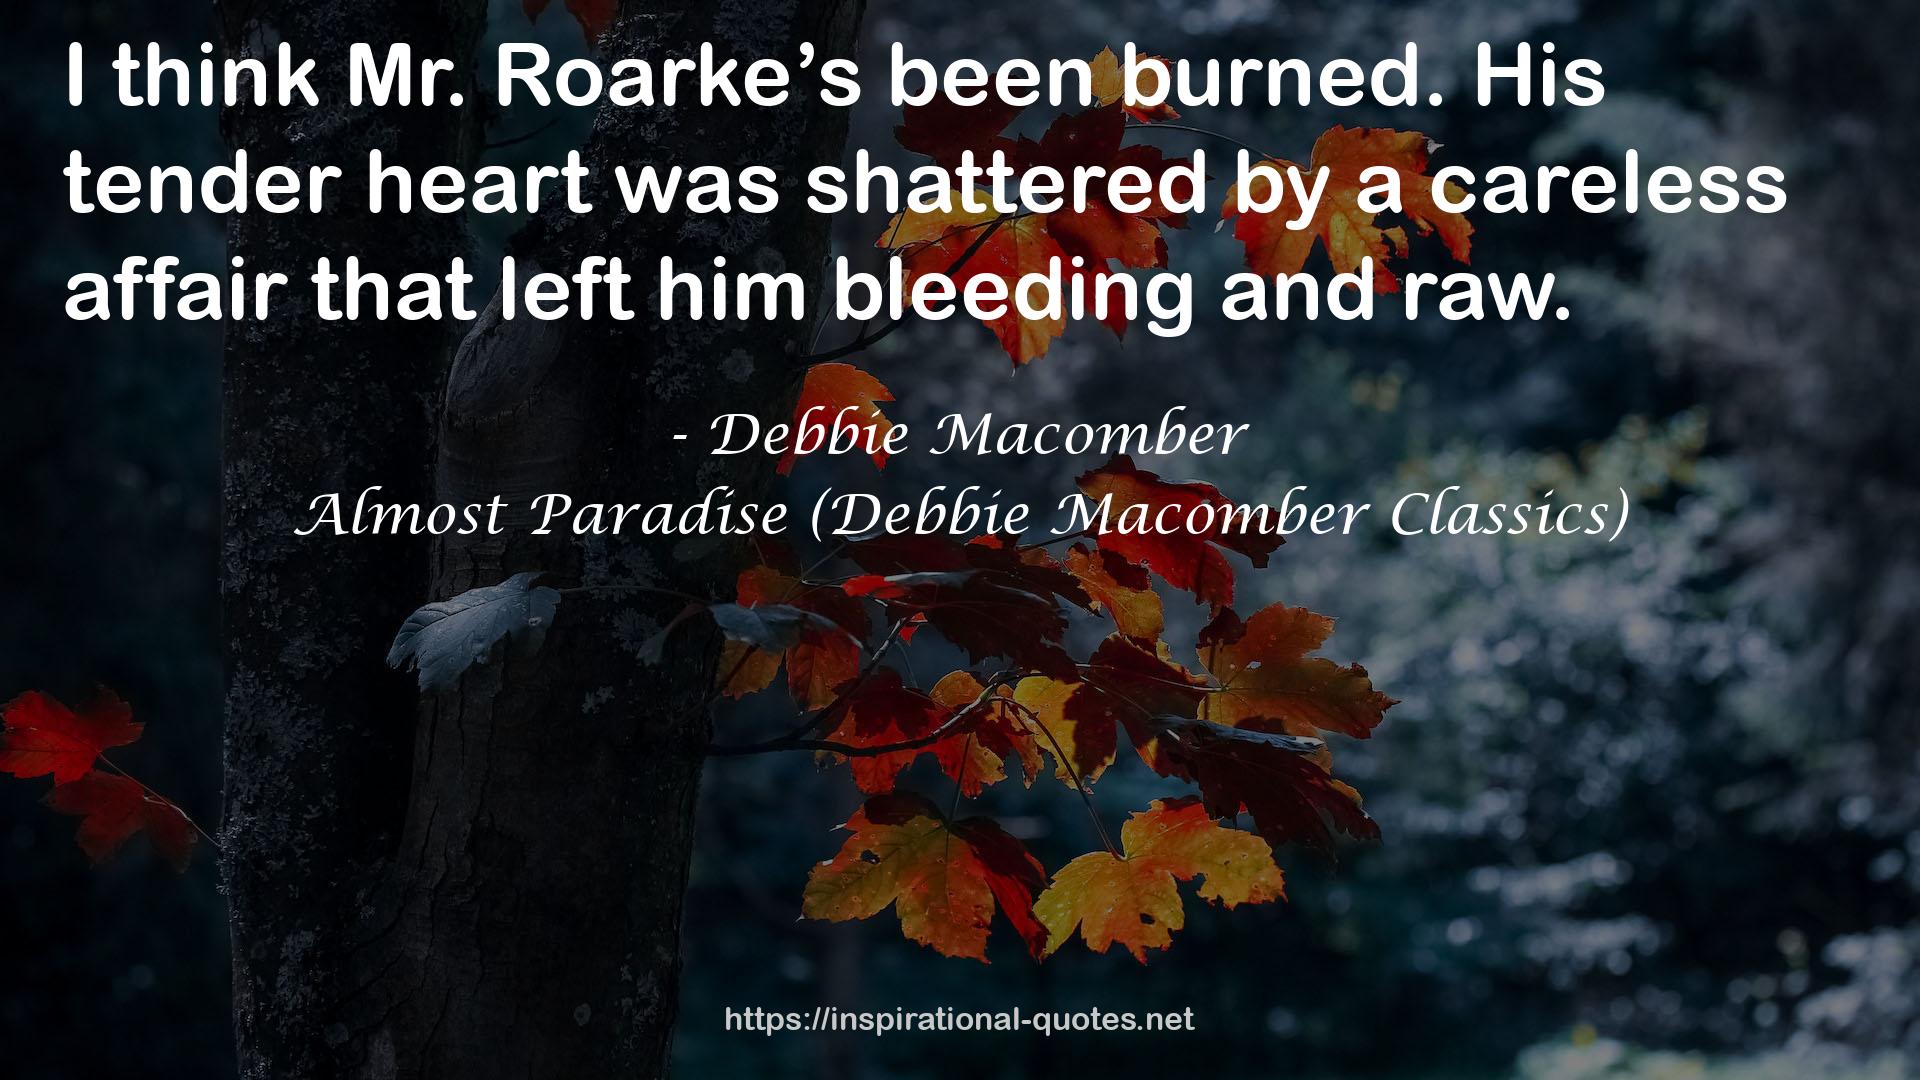 Almost Paradise (Debbie Macomber Classics) QUOTES